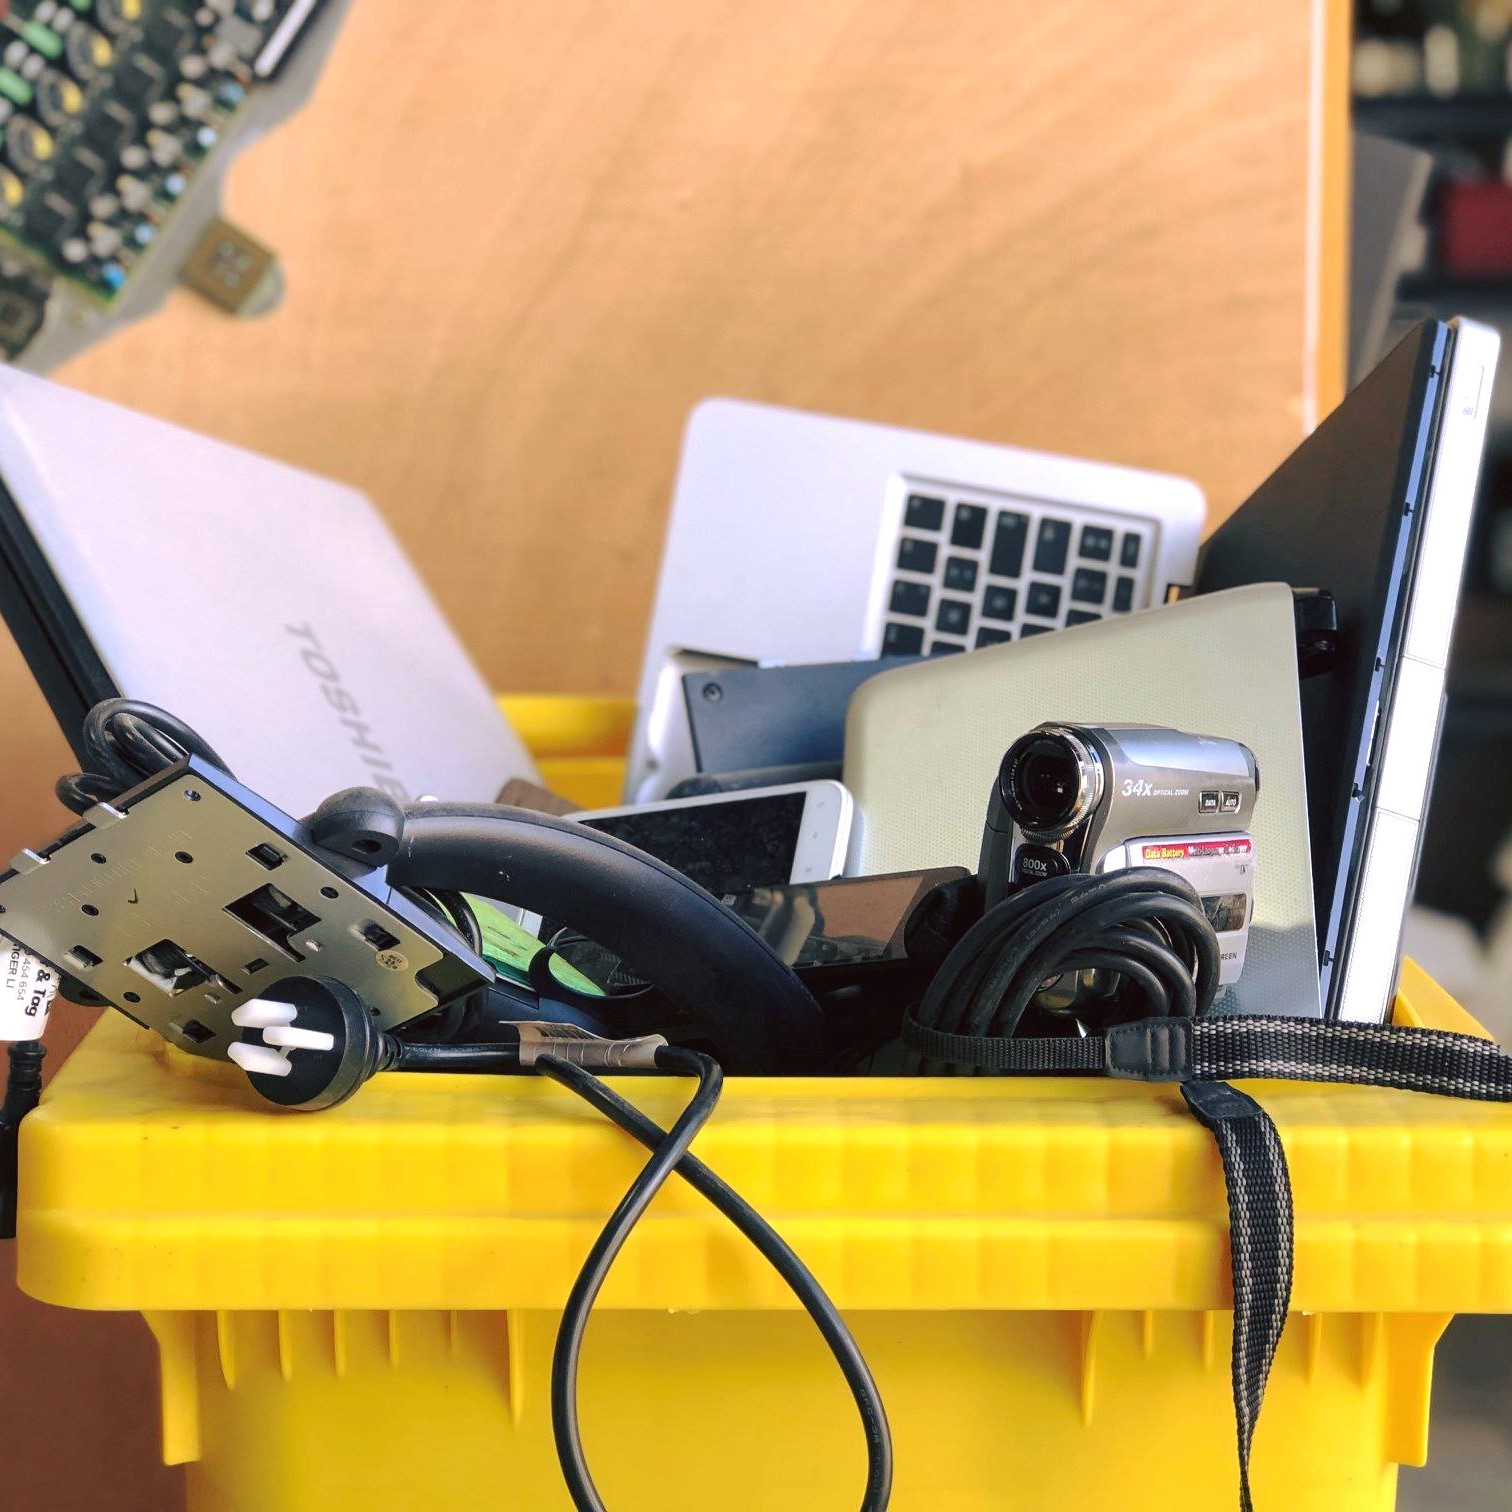 electronic waste in a yellow bin